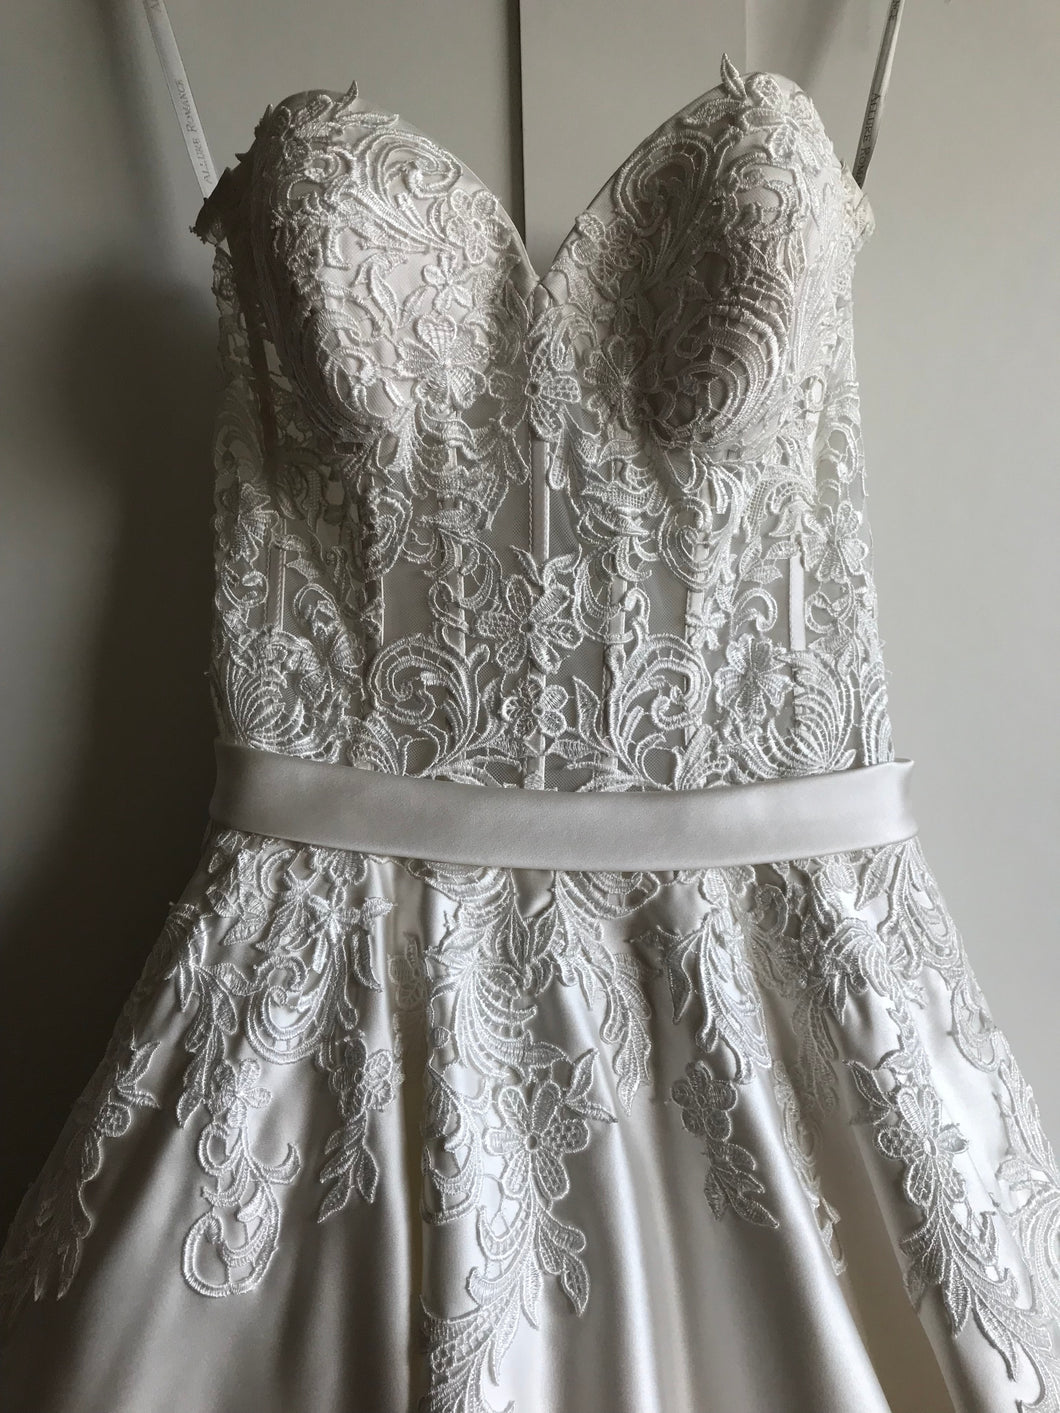 Allure 'Ballgown' size 4 new wedding dress front view on hanger